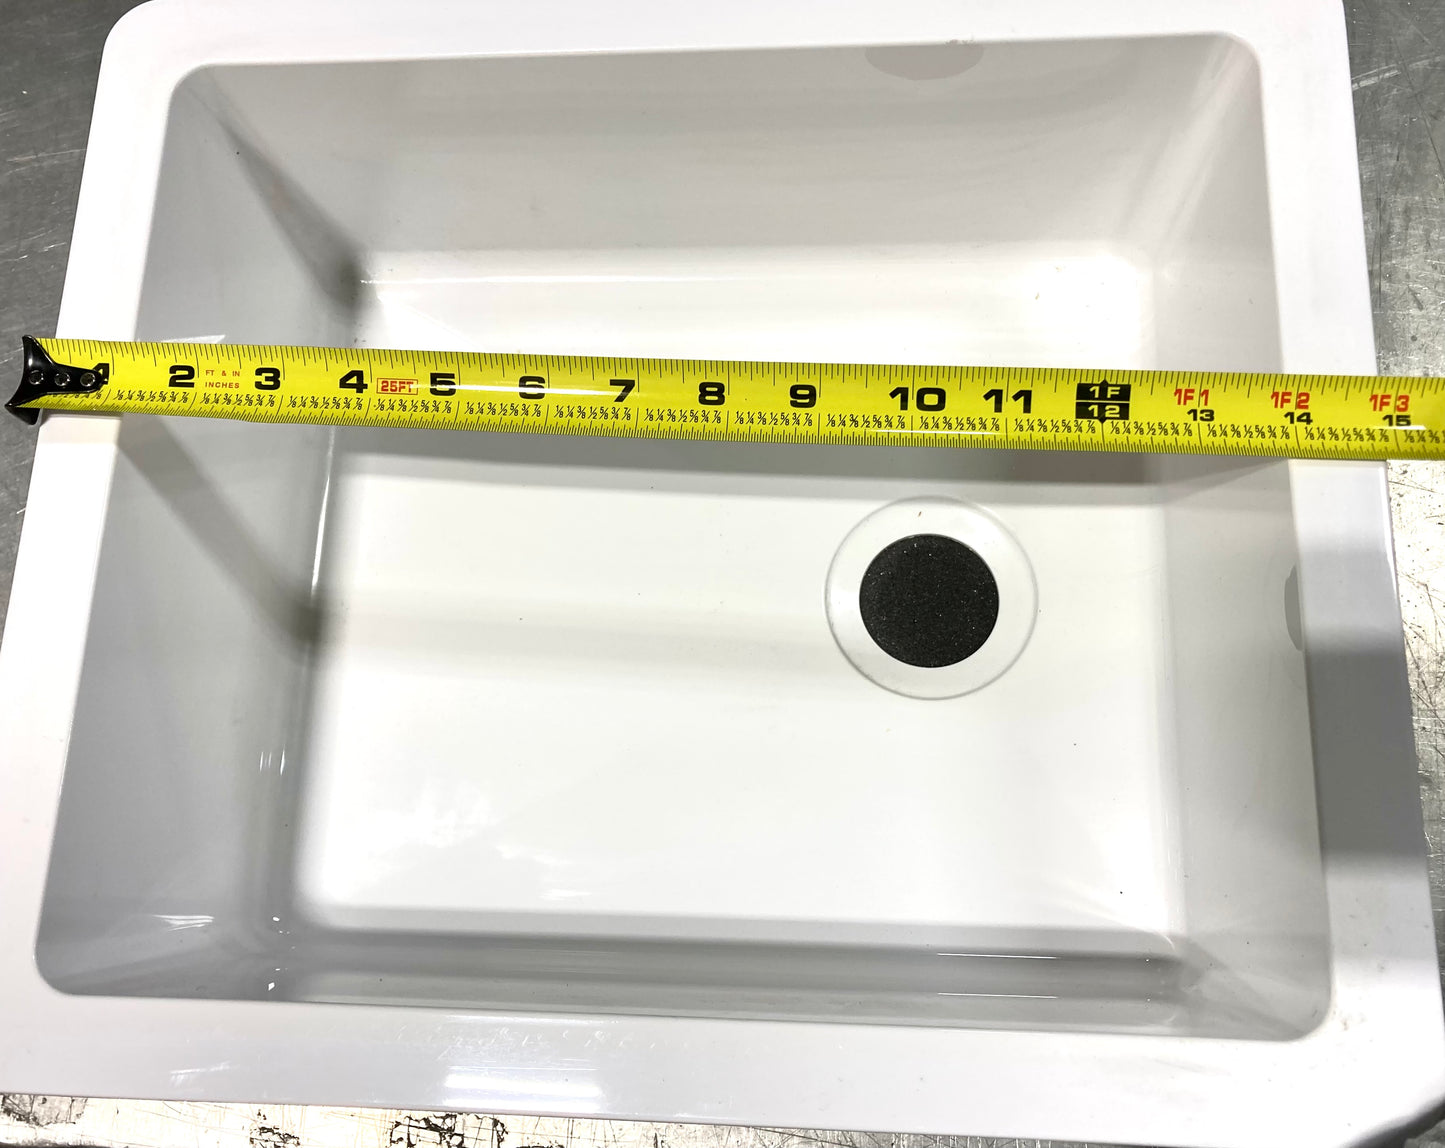 Clearance kitchen/bathroom sinks